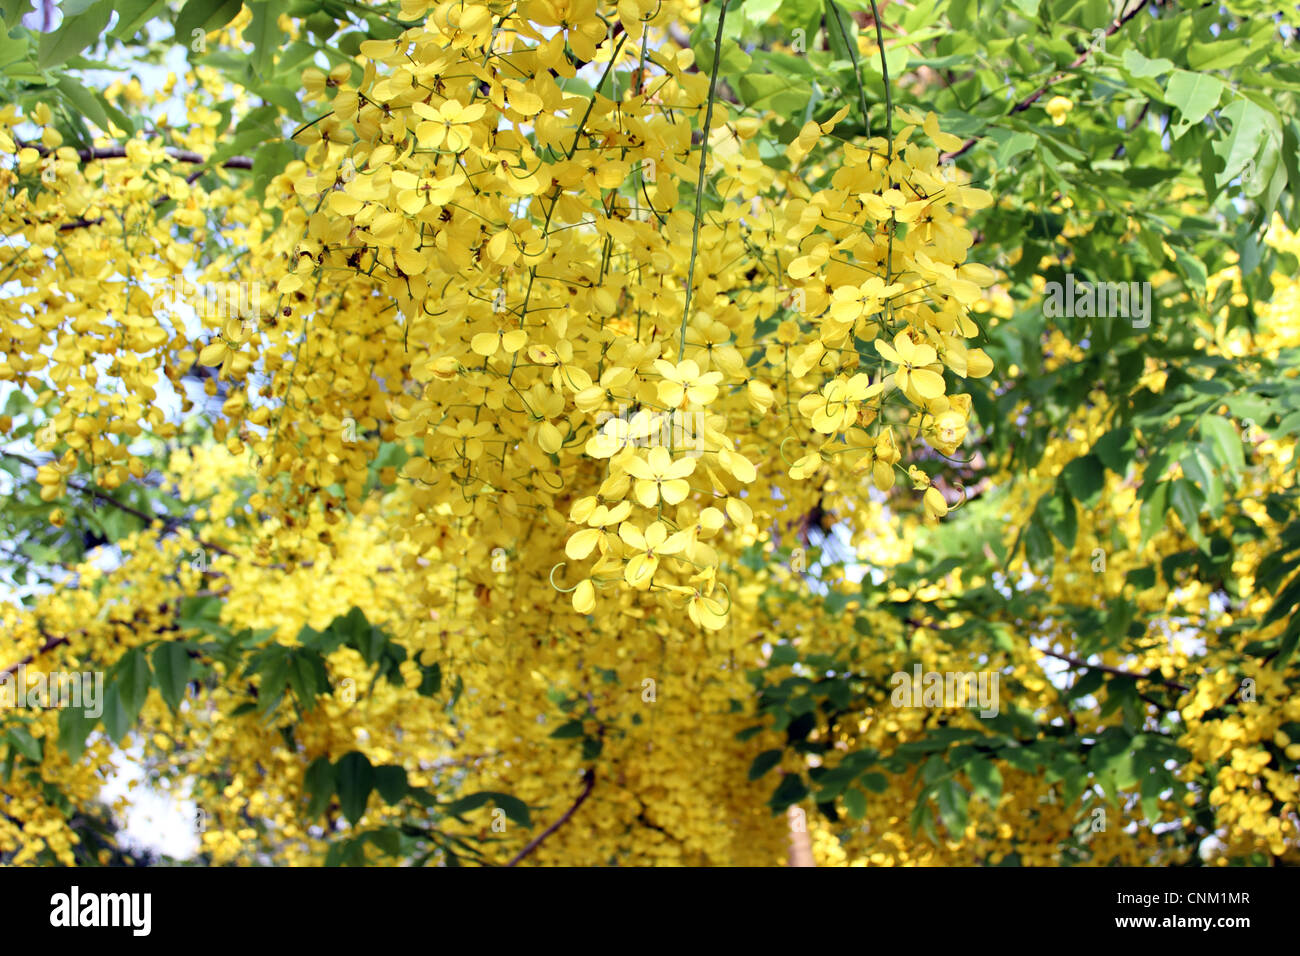 Flowers of cassia fistula or golden shower tree Stock Photo   Alamy